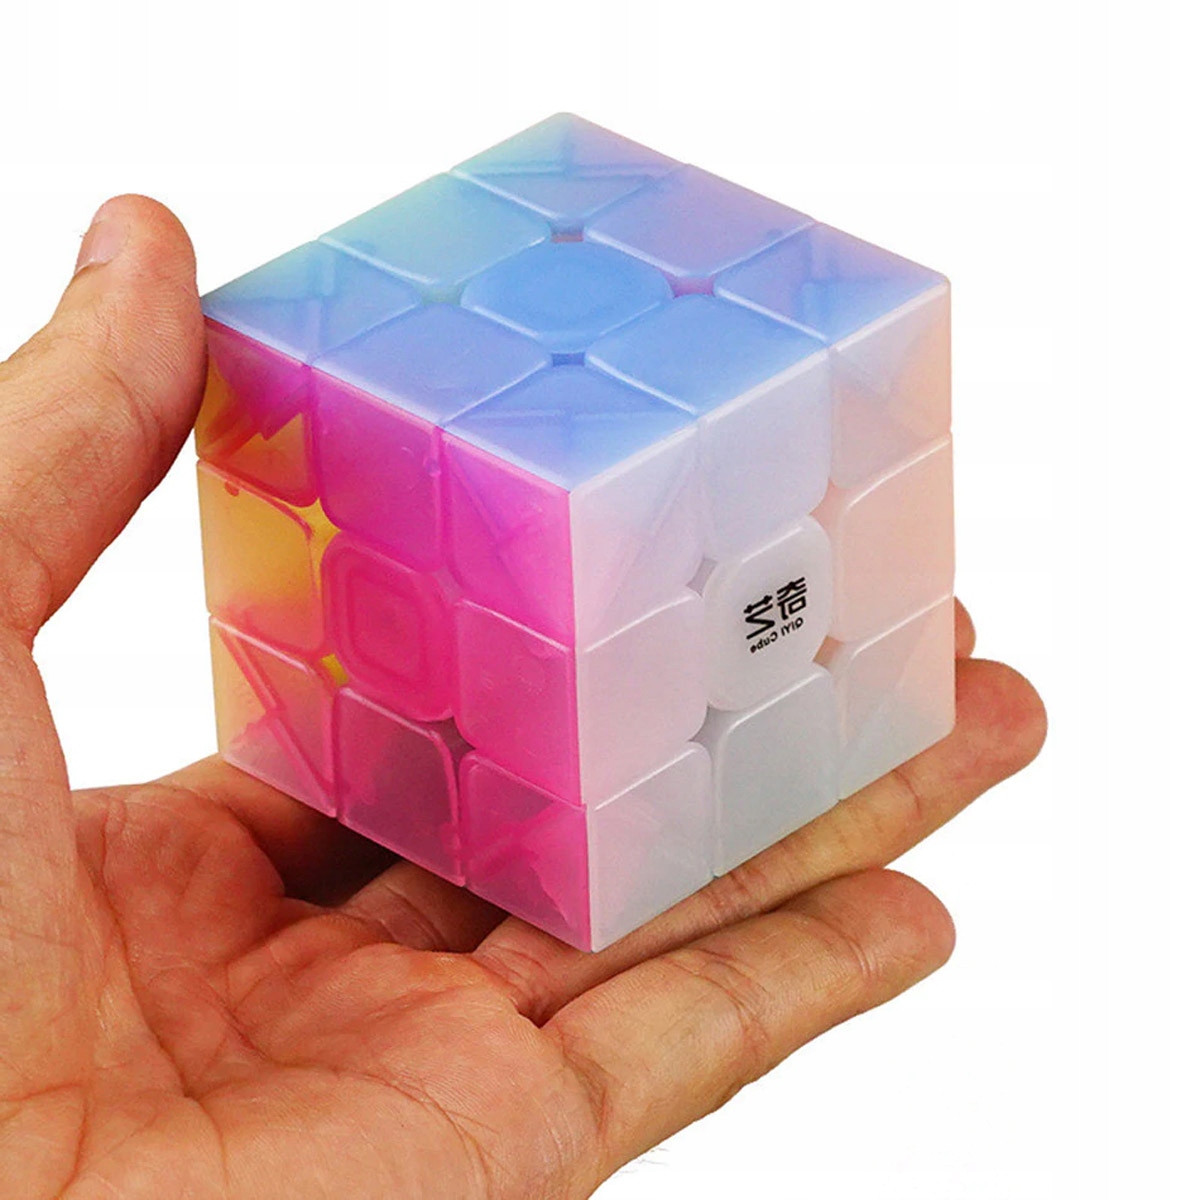 Jelly cubes. QIYI Cube Jelly. Магический куб 3x3. Прозрачные кубики. Магический кубик головоломка.